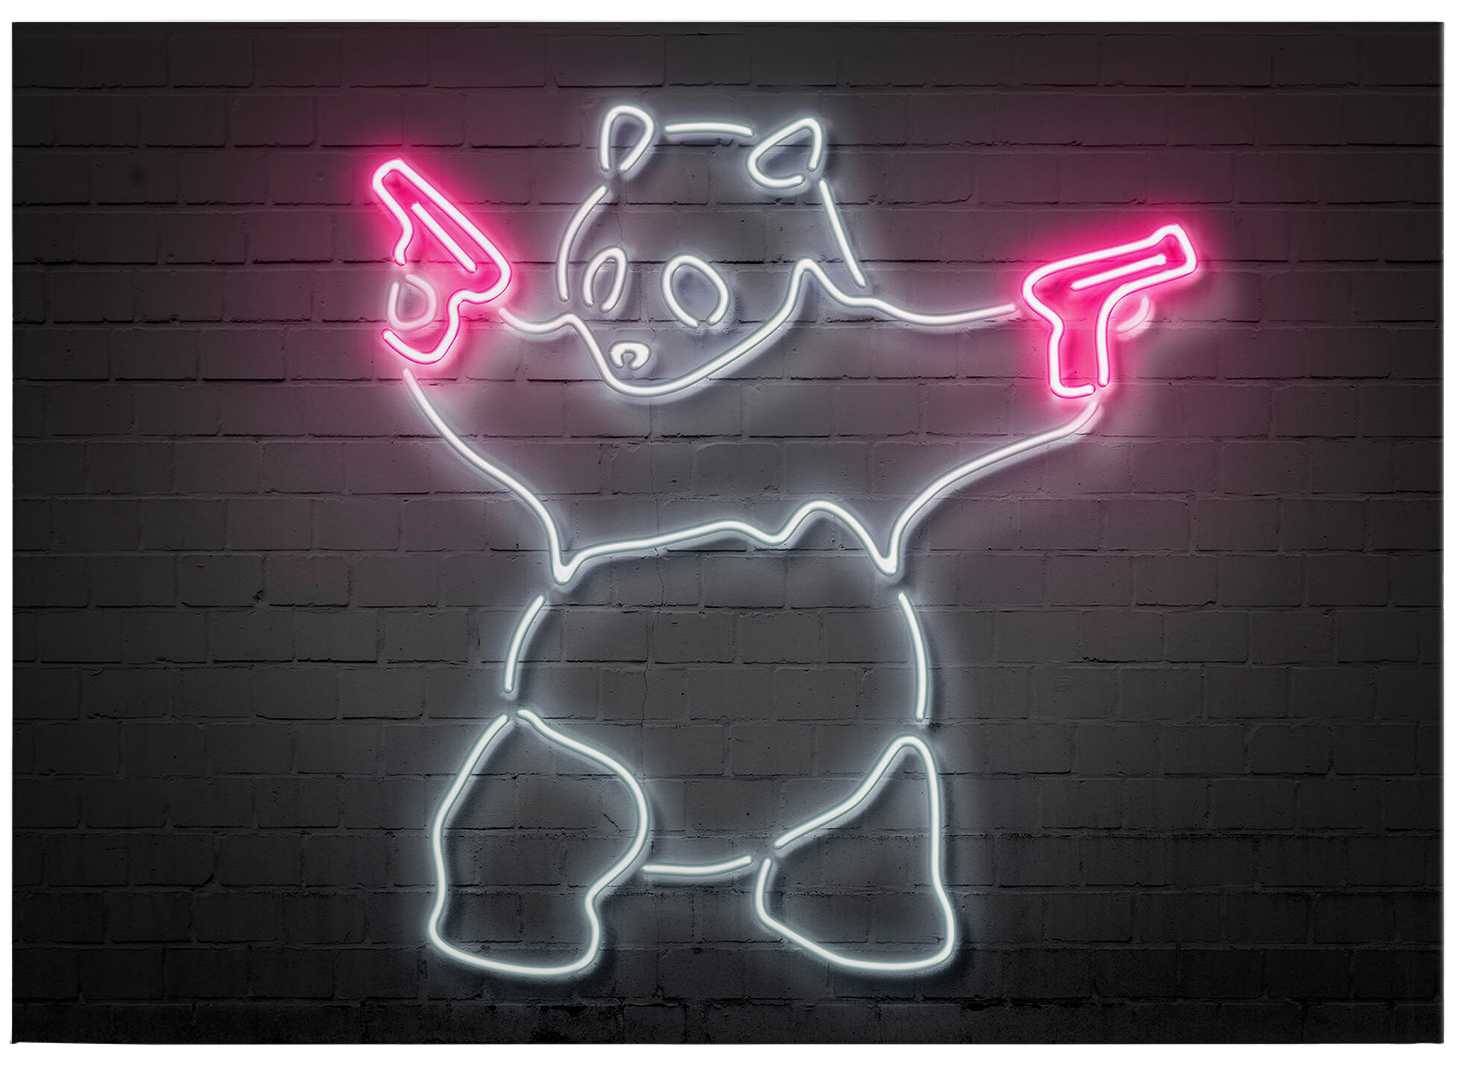             Canvas schilderij Neon bord "Panda" van Mielu - 0,70 m x 0,50 m
        